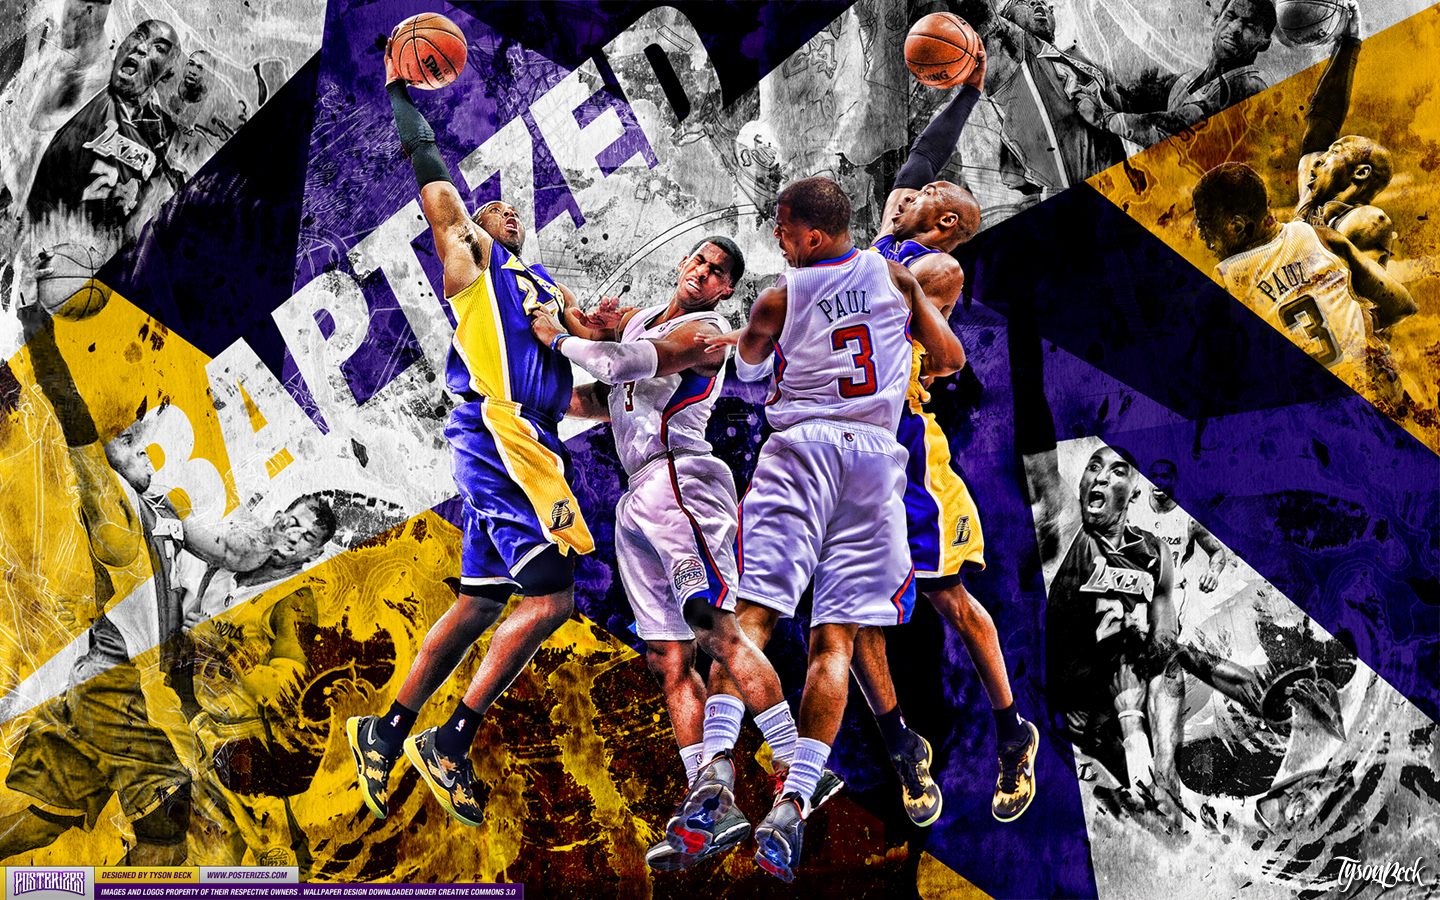 Lakers-Kobe-Bryant-Dunk-Pose-HD-Wallpaper-1024x658